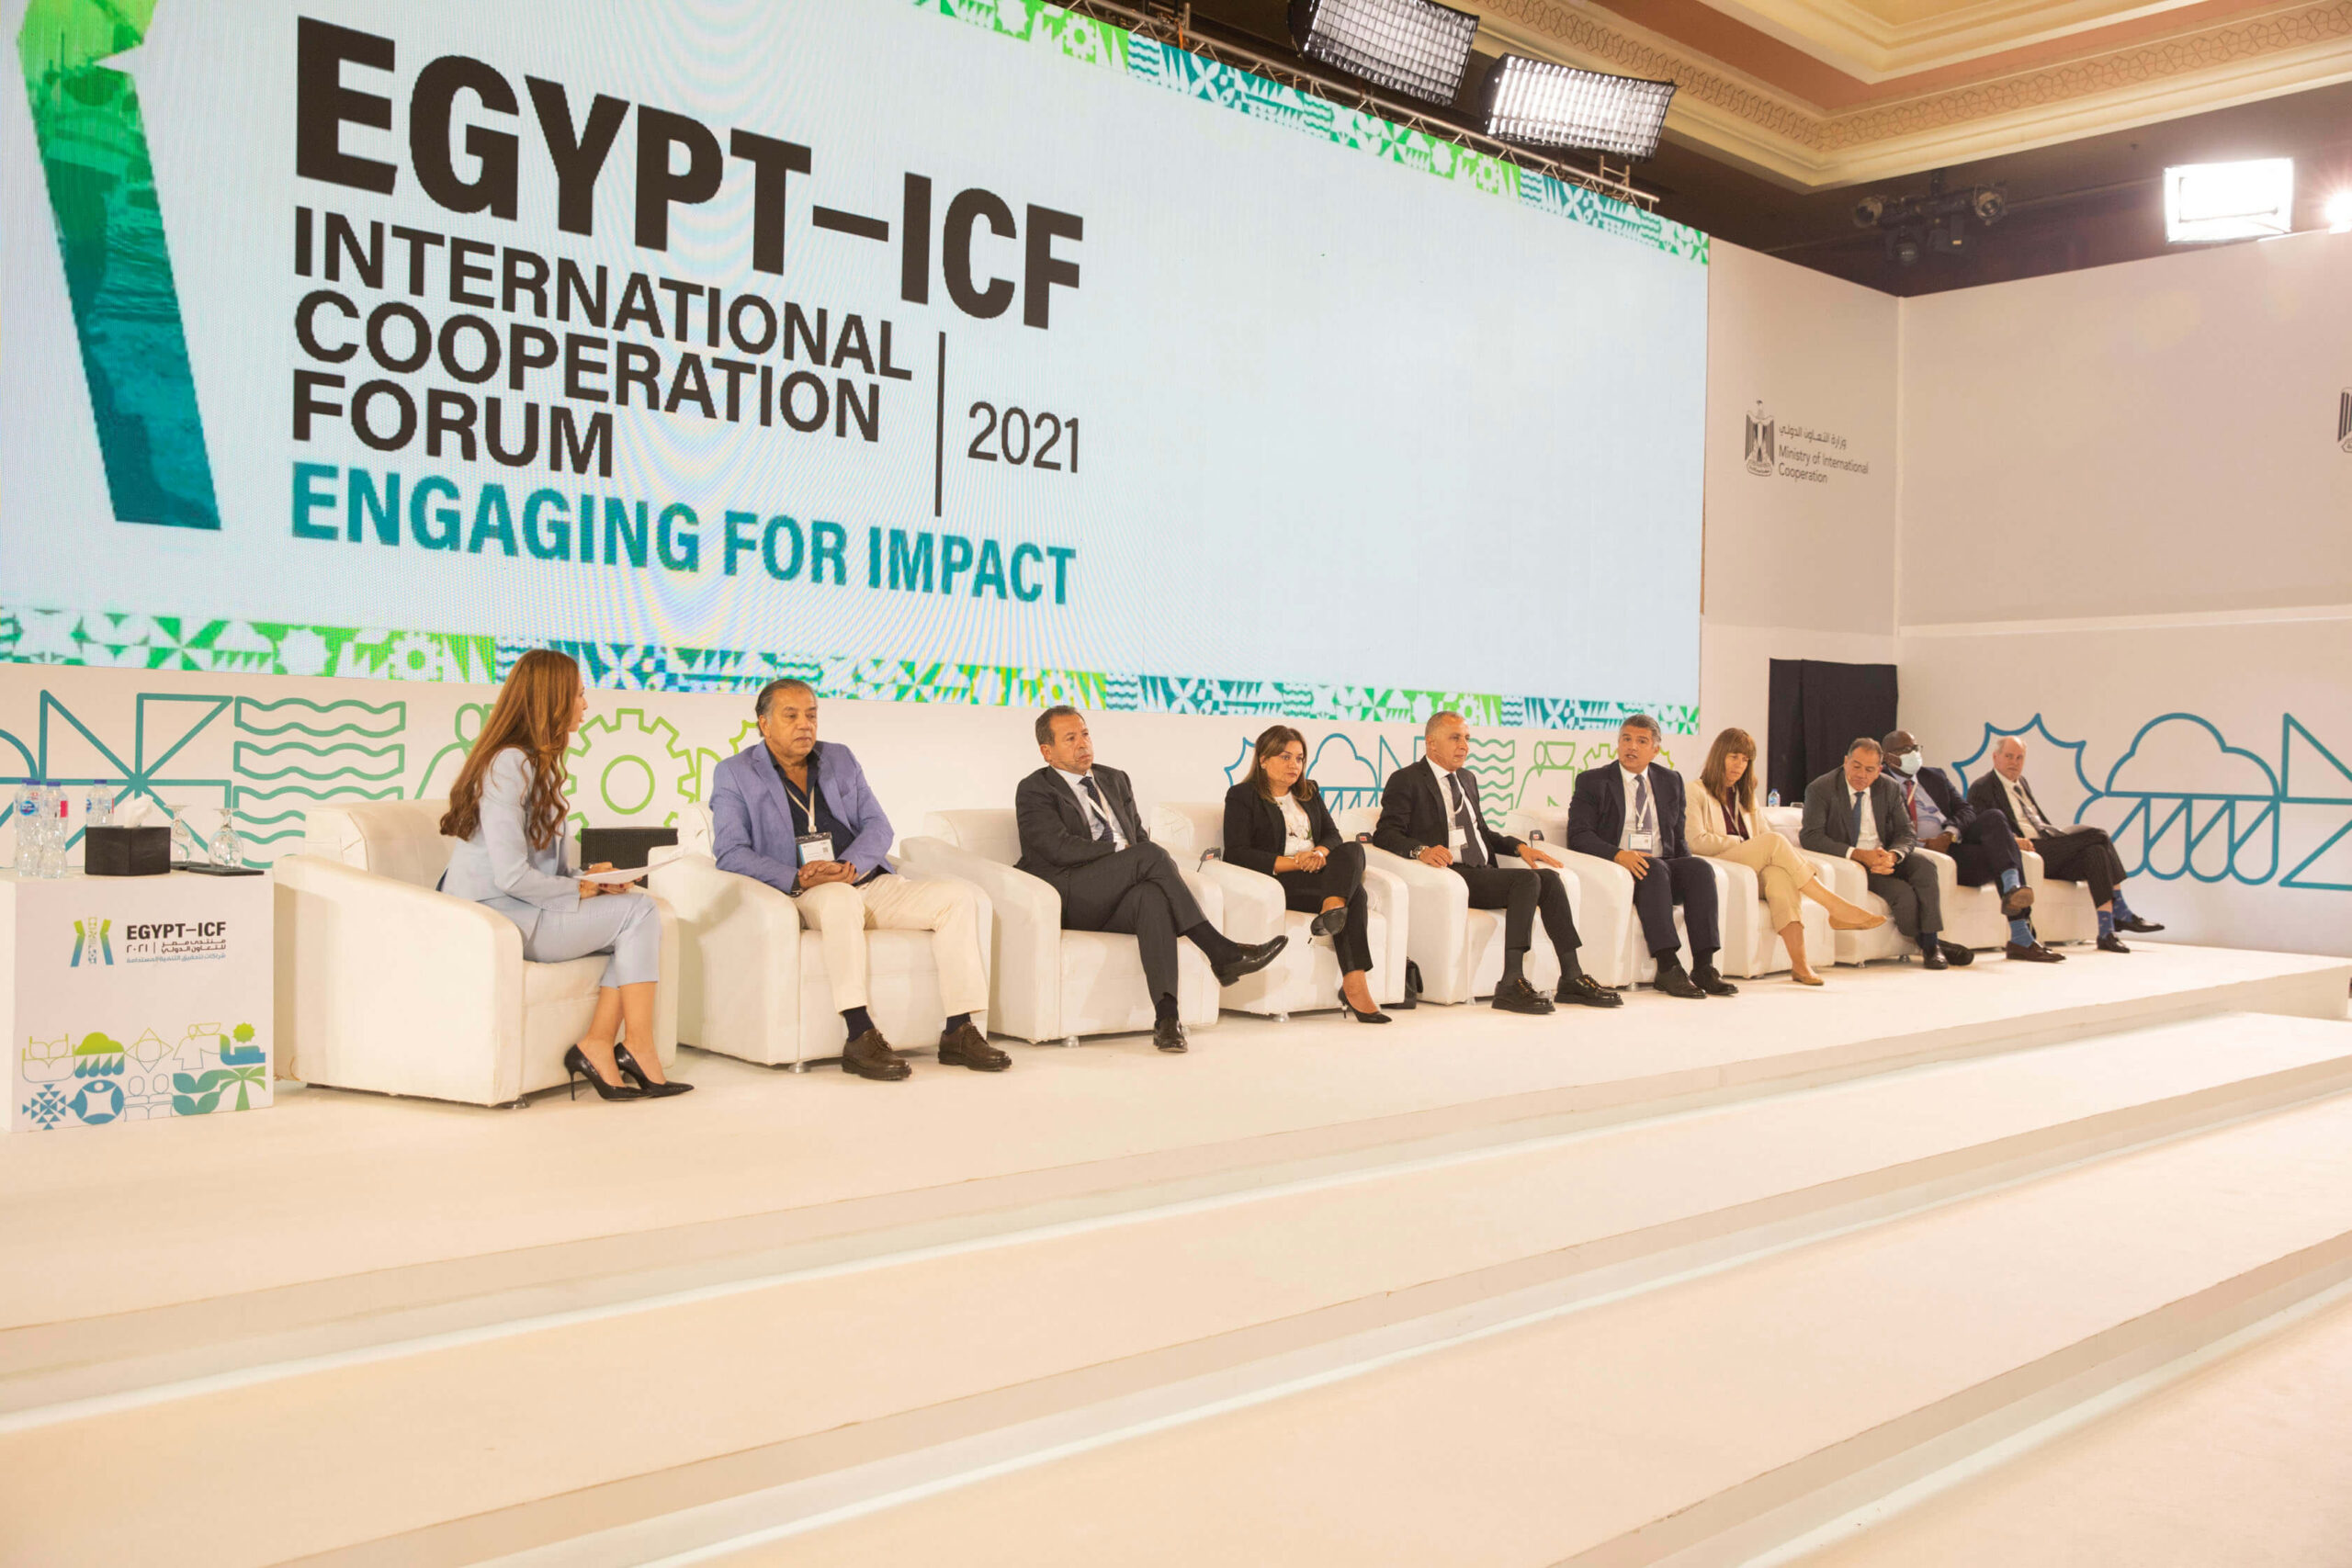 Egypt – International Cooperation Forum